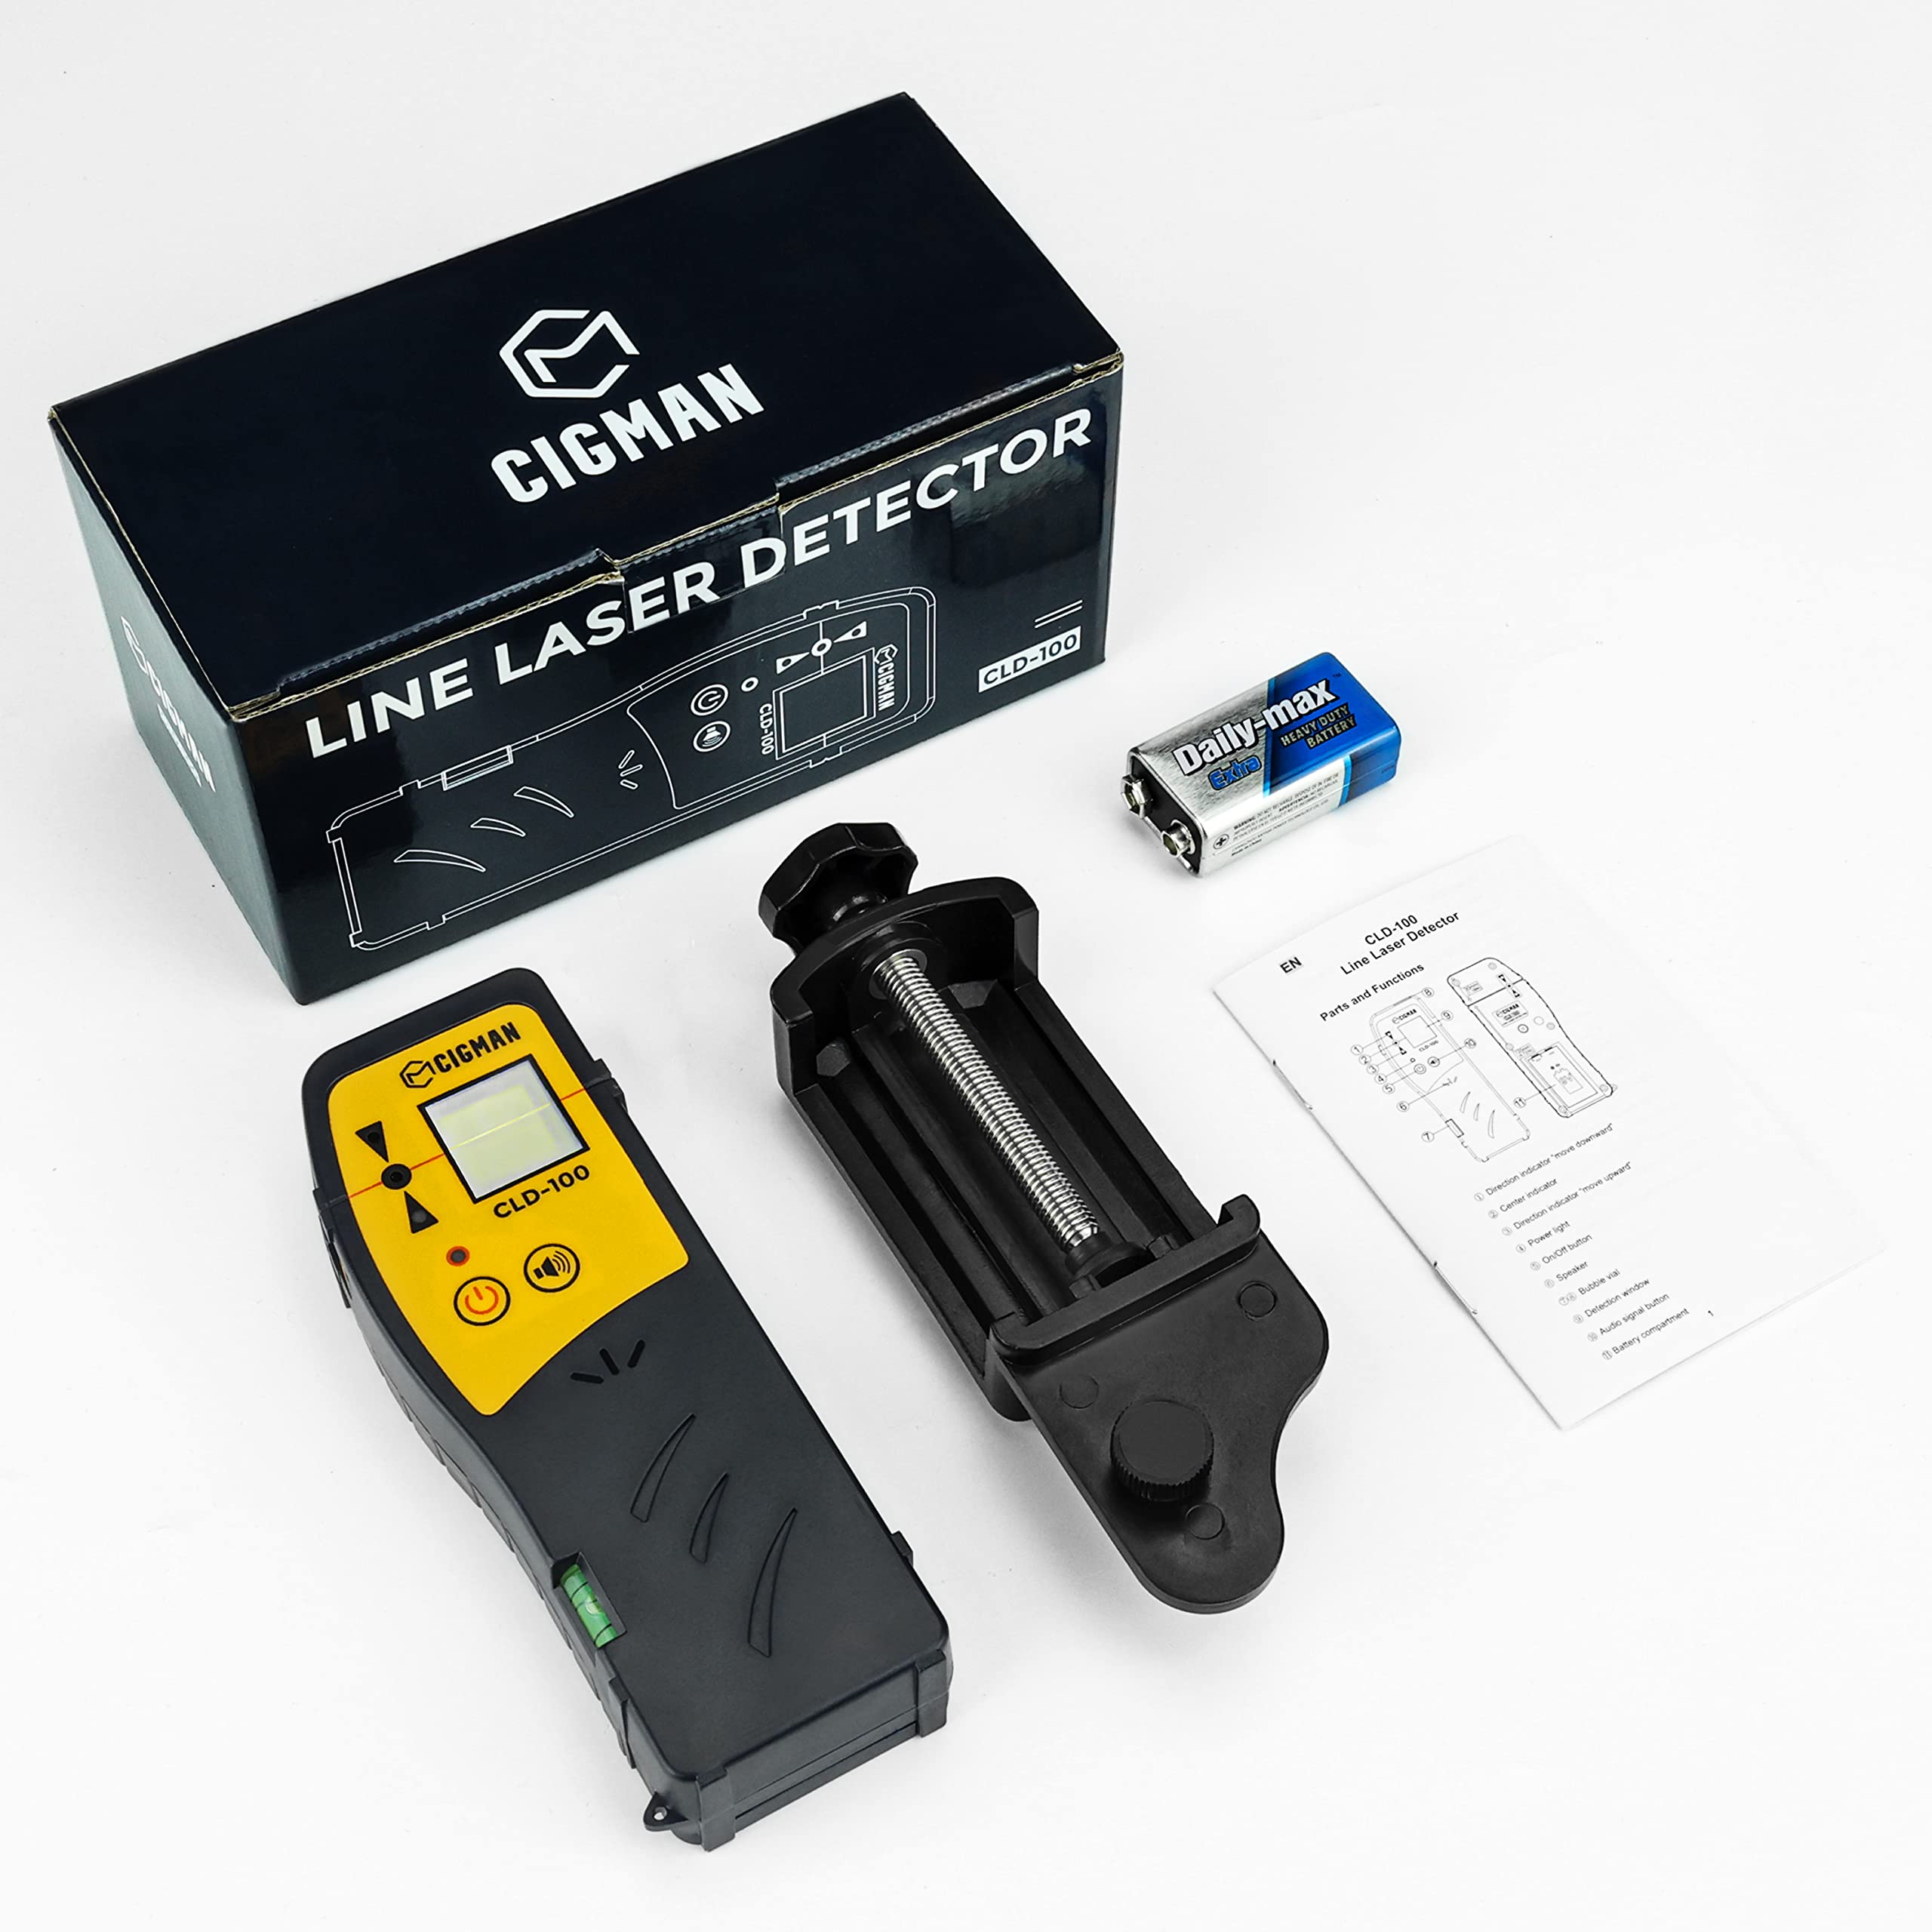 CIGMAN CLD-100 Laser Receiver